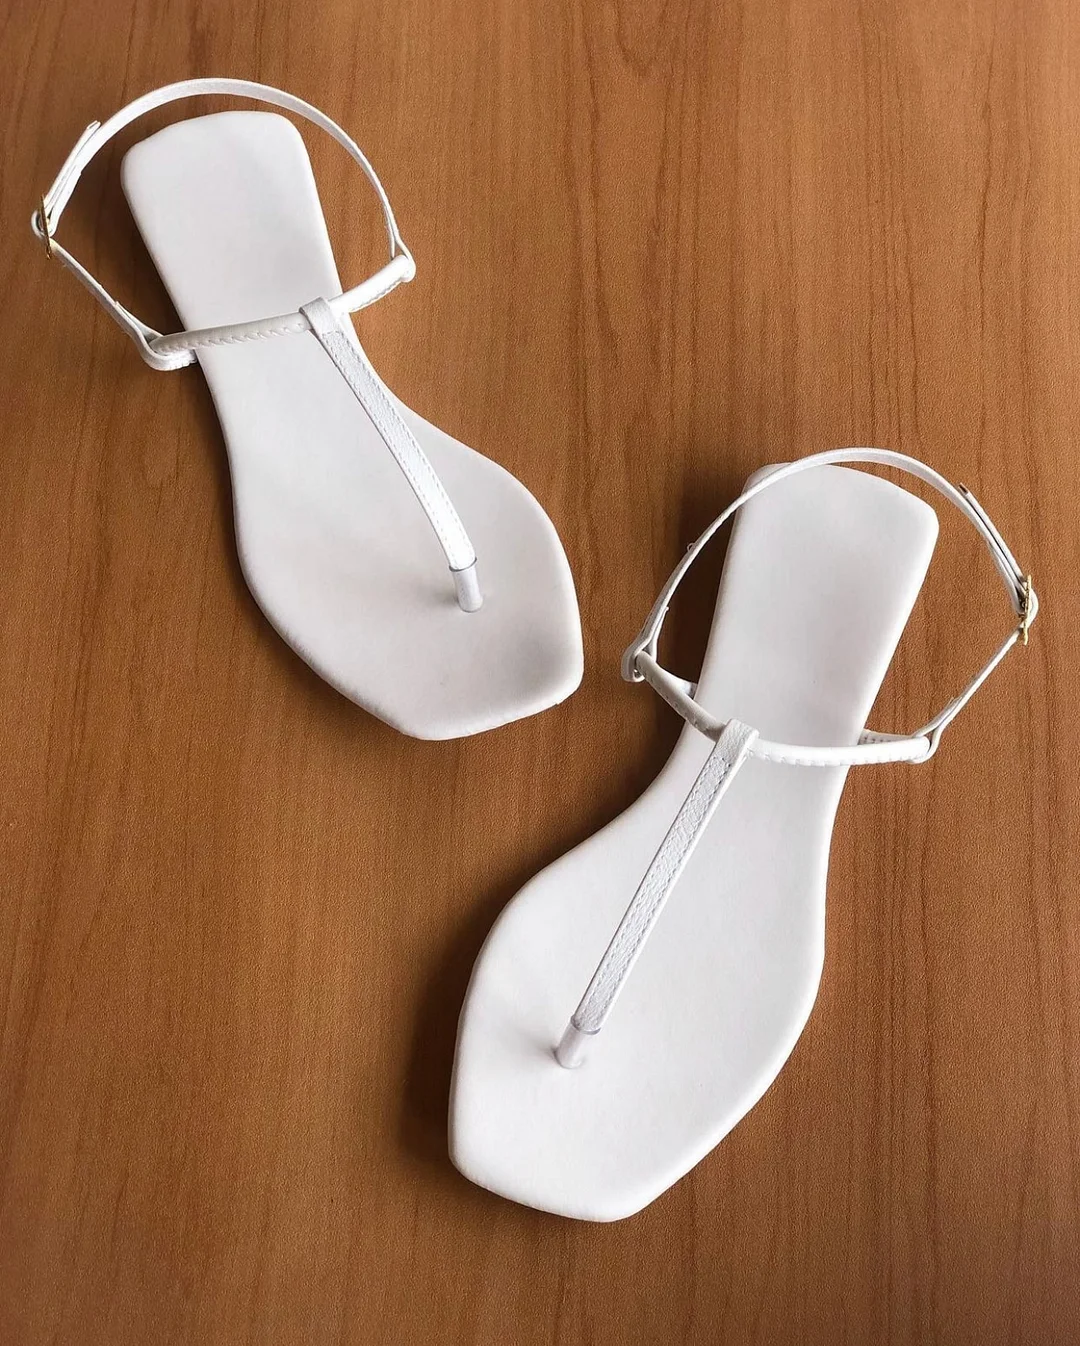 Tanguoant Flat Women's Beach Sandals Flip Flops Summer T-strap Soft Women Sandals Ankle Strap Seaside Holiday Sandals for Girls